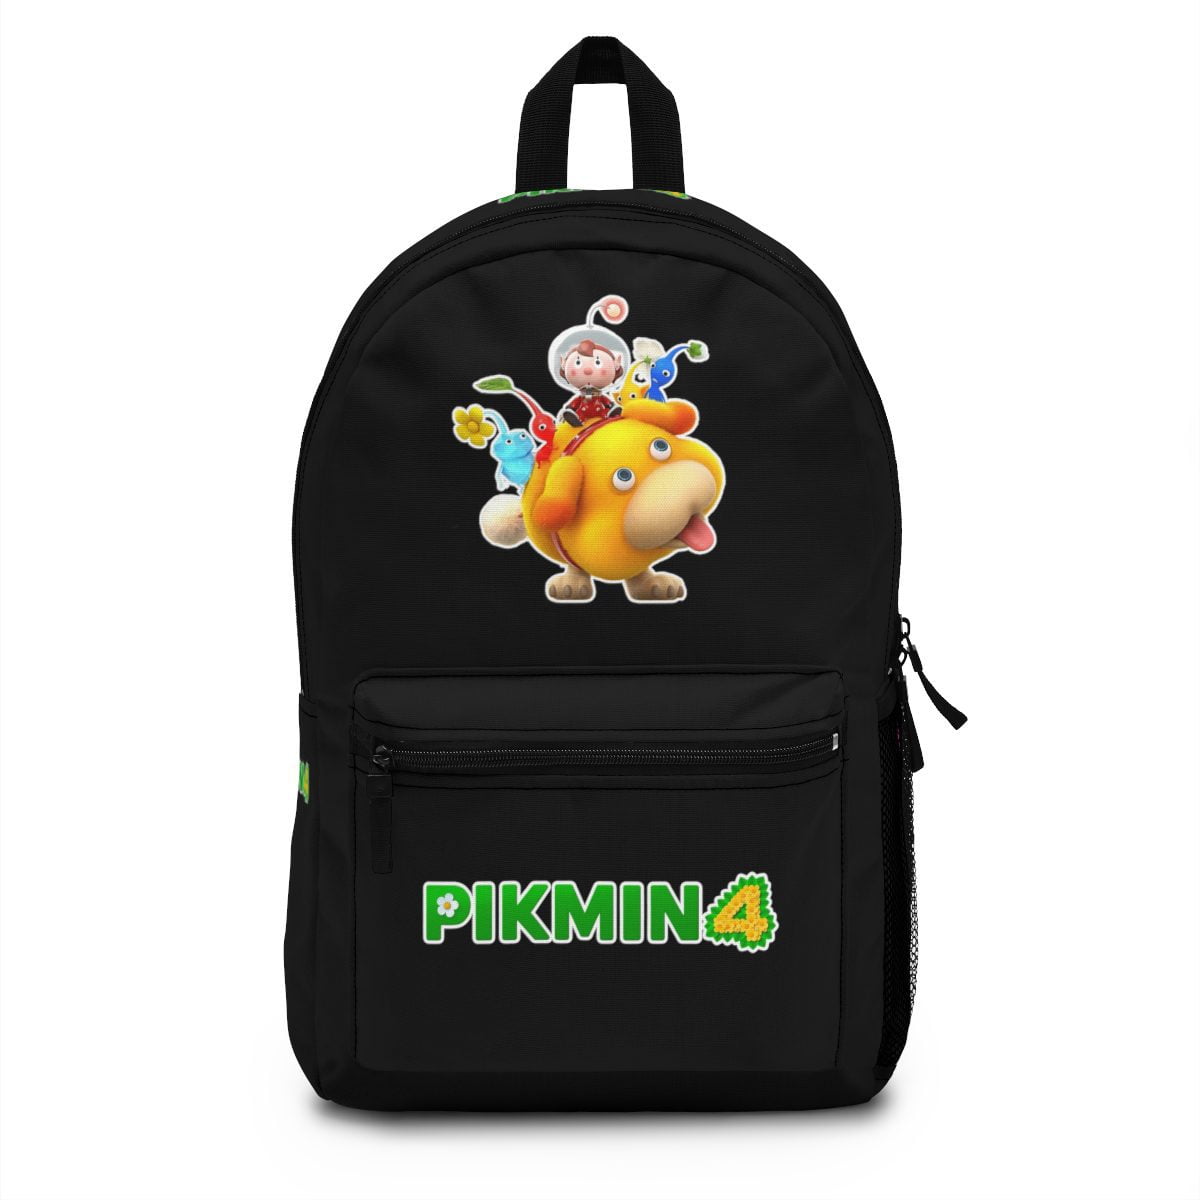 PIKMIN 4 Video Game Black Backpack Cool Kiddo 10